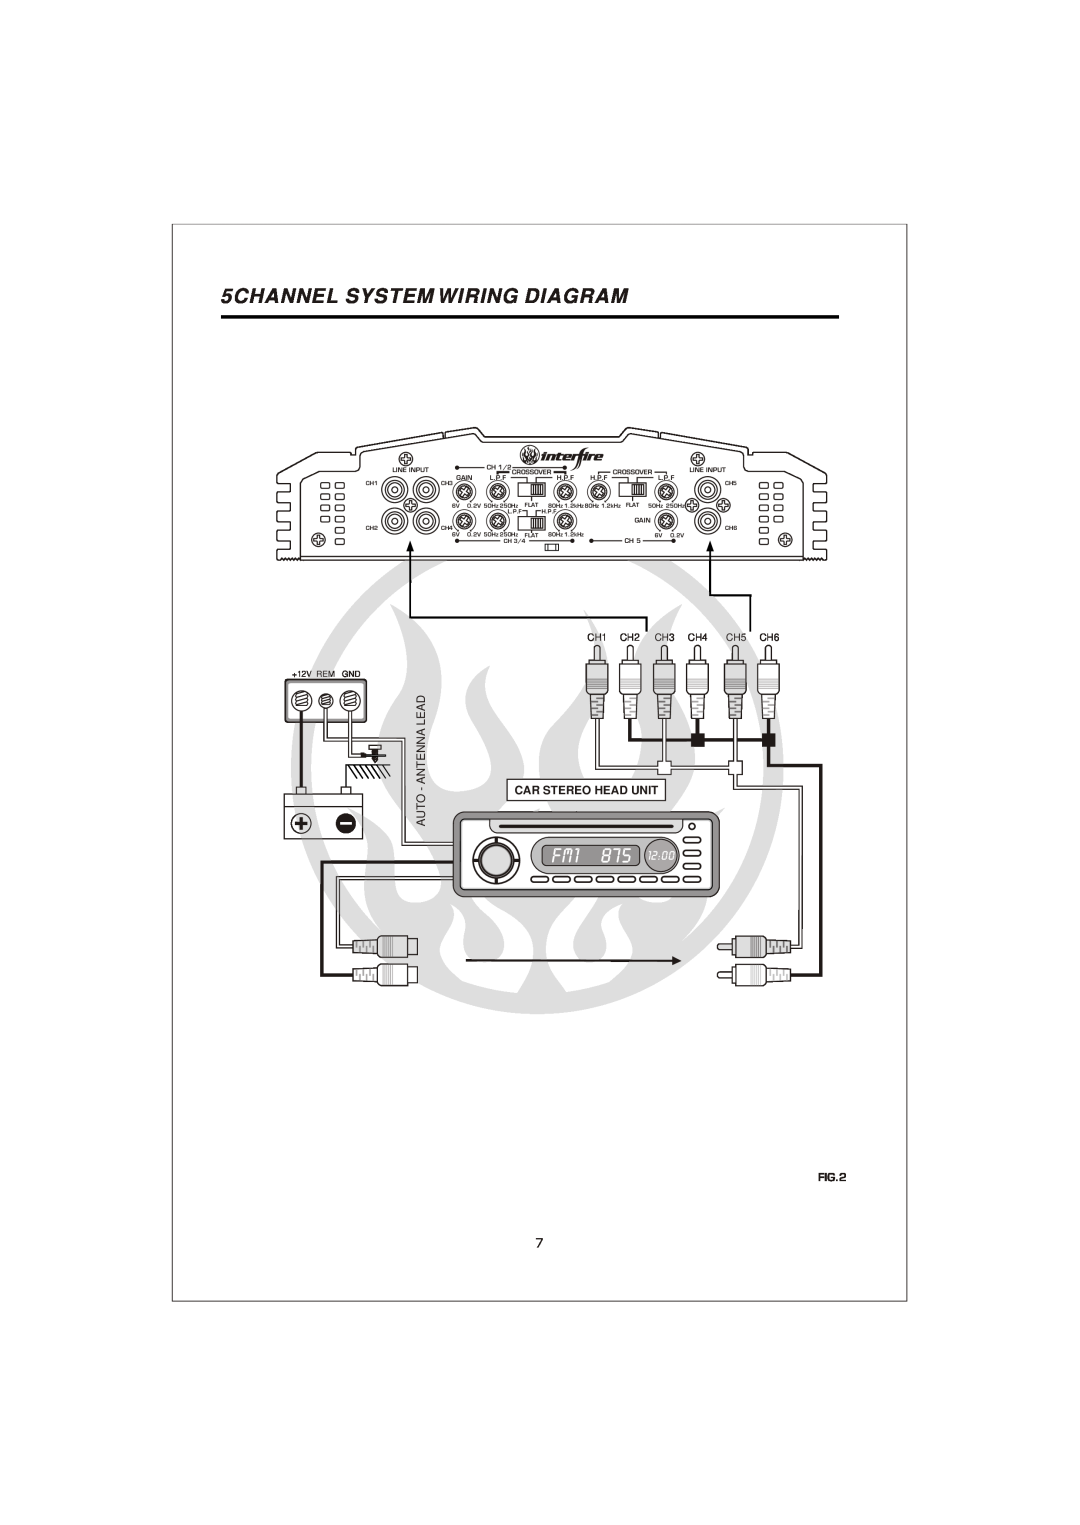 Interfire Audio G2-800, G4-1000, G5-900, G4-800, G4-600, G2-600 5CHANNEL SYSTEM WIRING DIAGRAM, Car Stereo Head Unit, +12V REM 